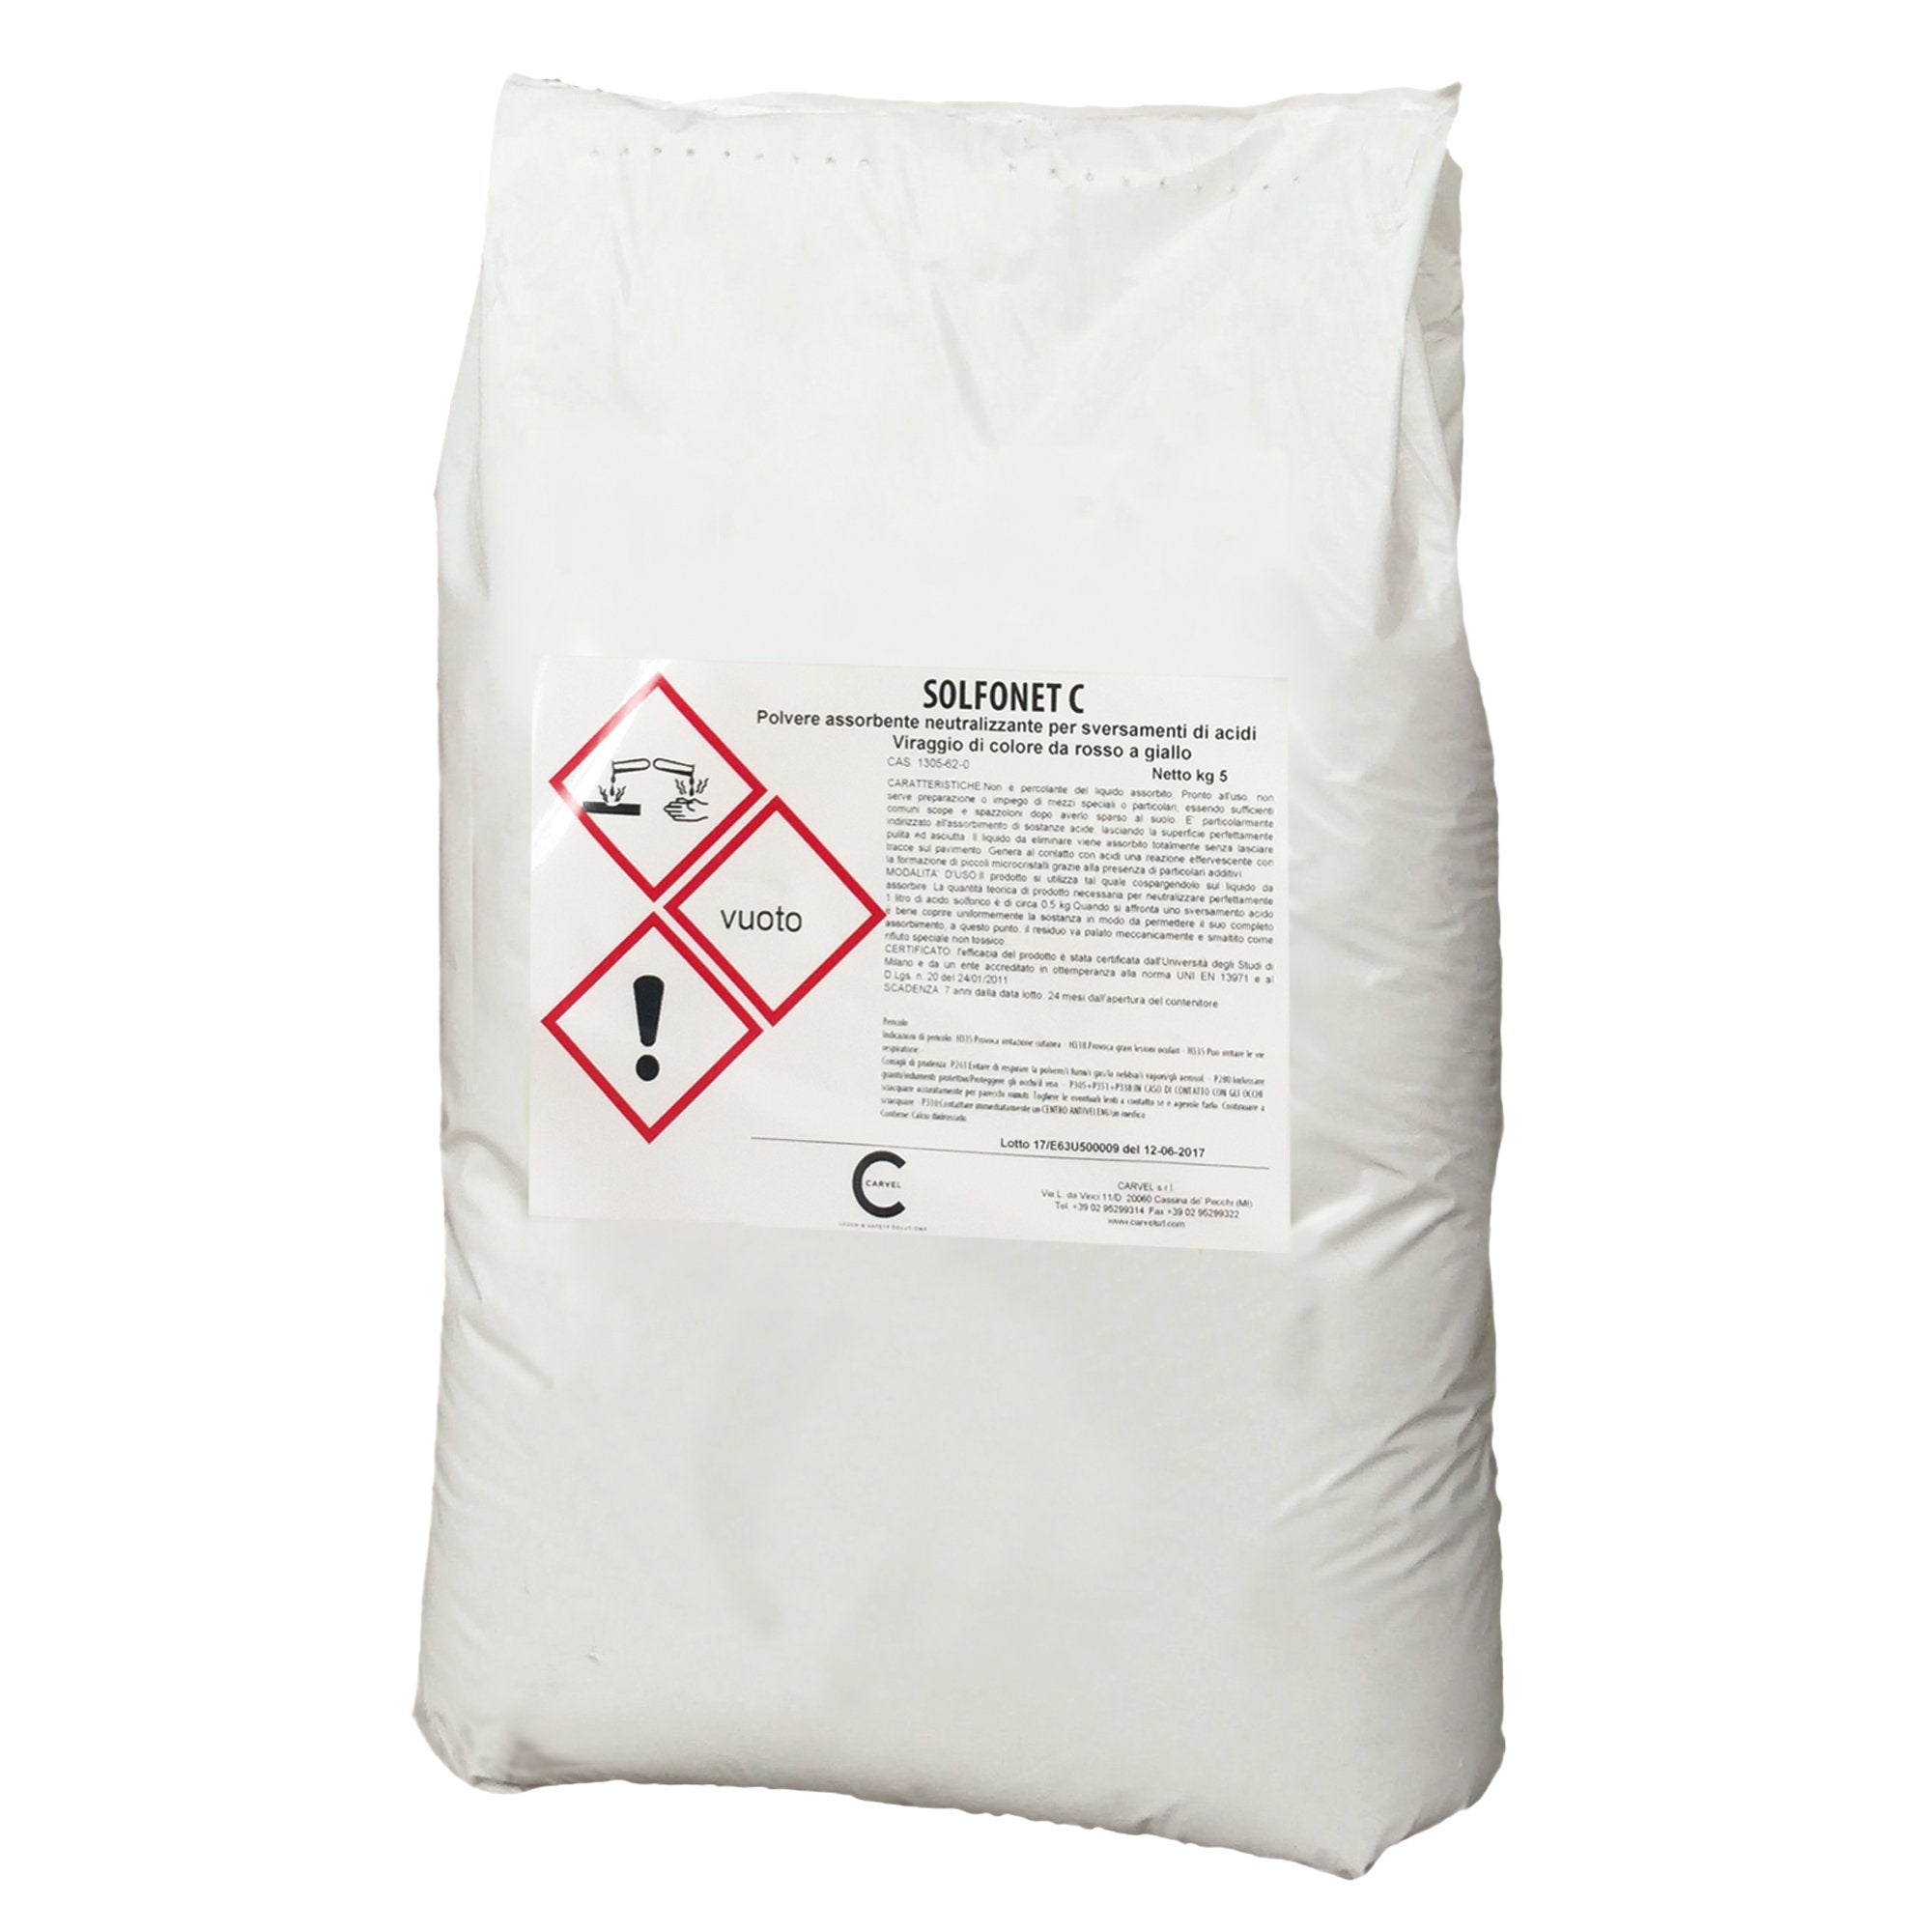 carvel-polvere-assorbente-sversamenti-acidi-solfonet-sacco-5kg